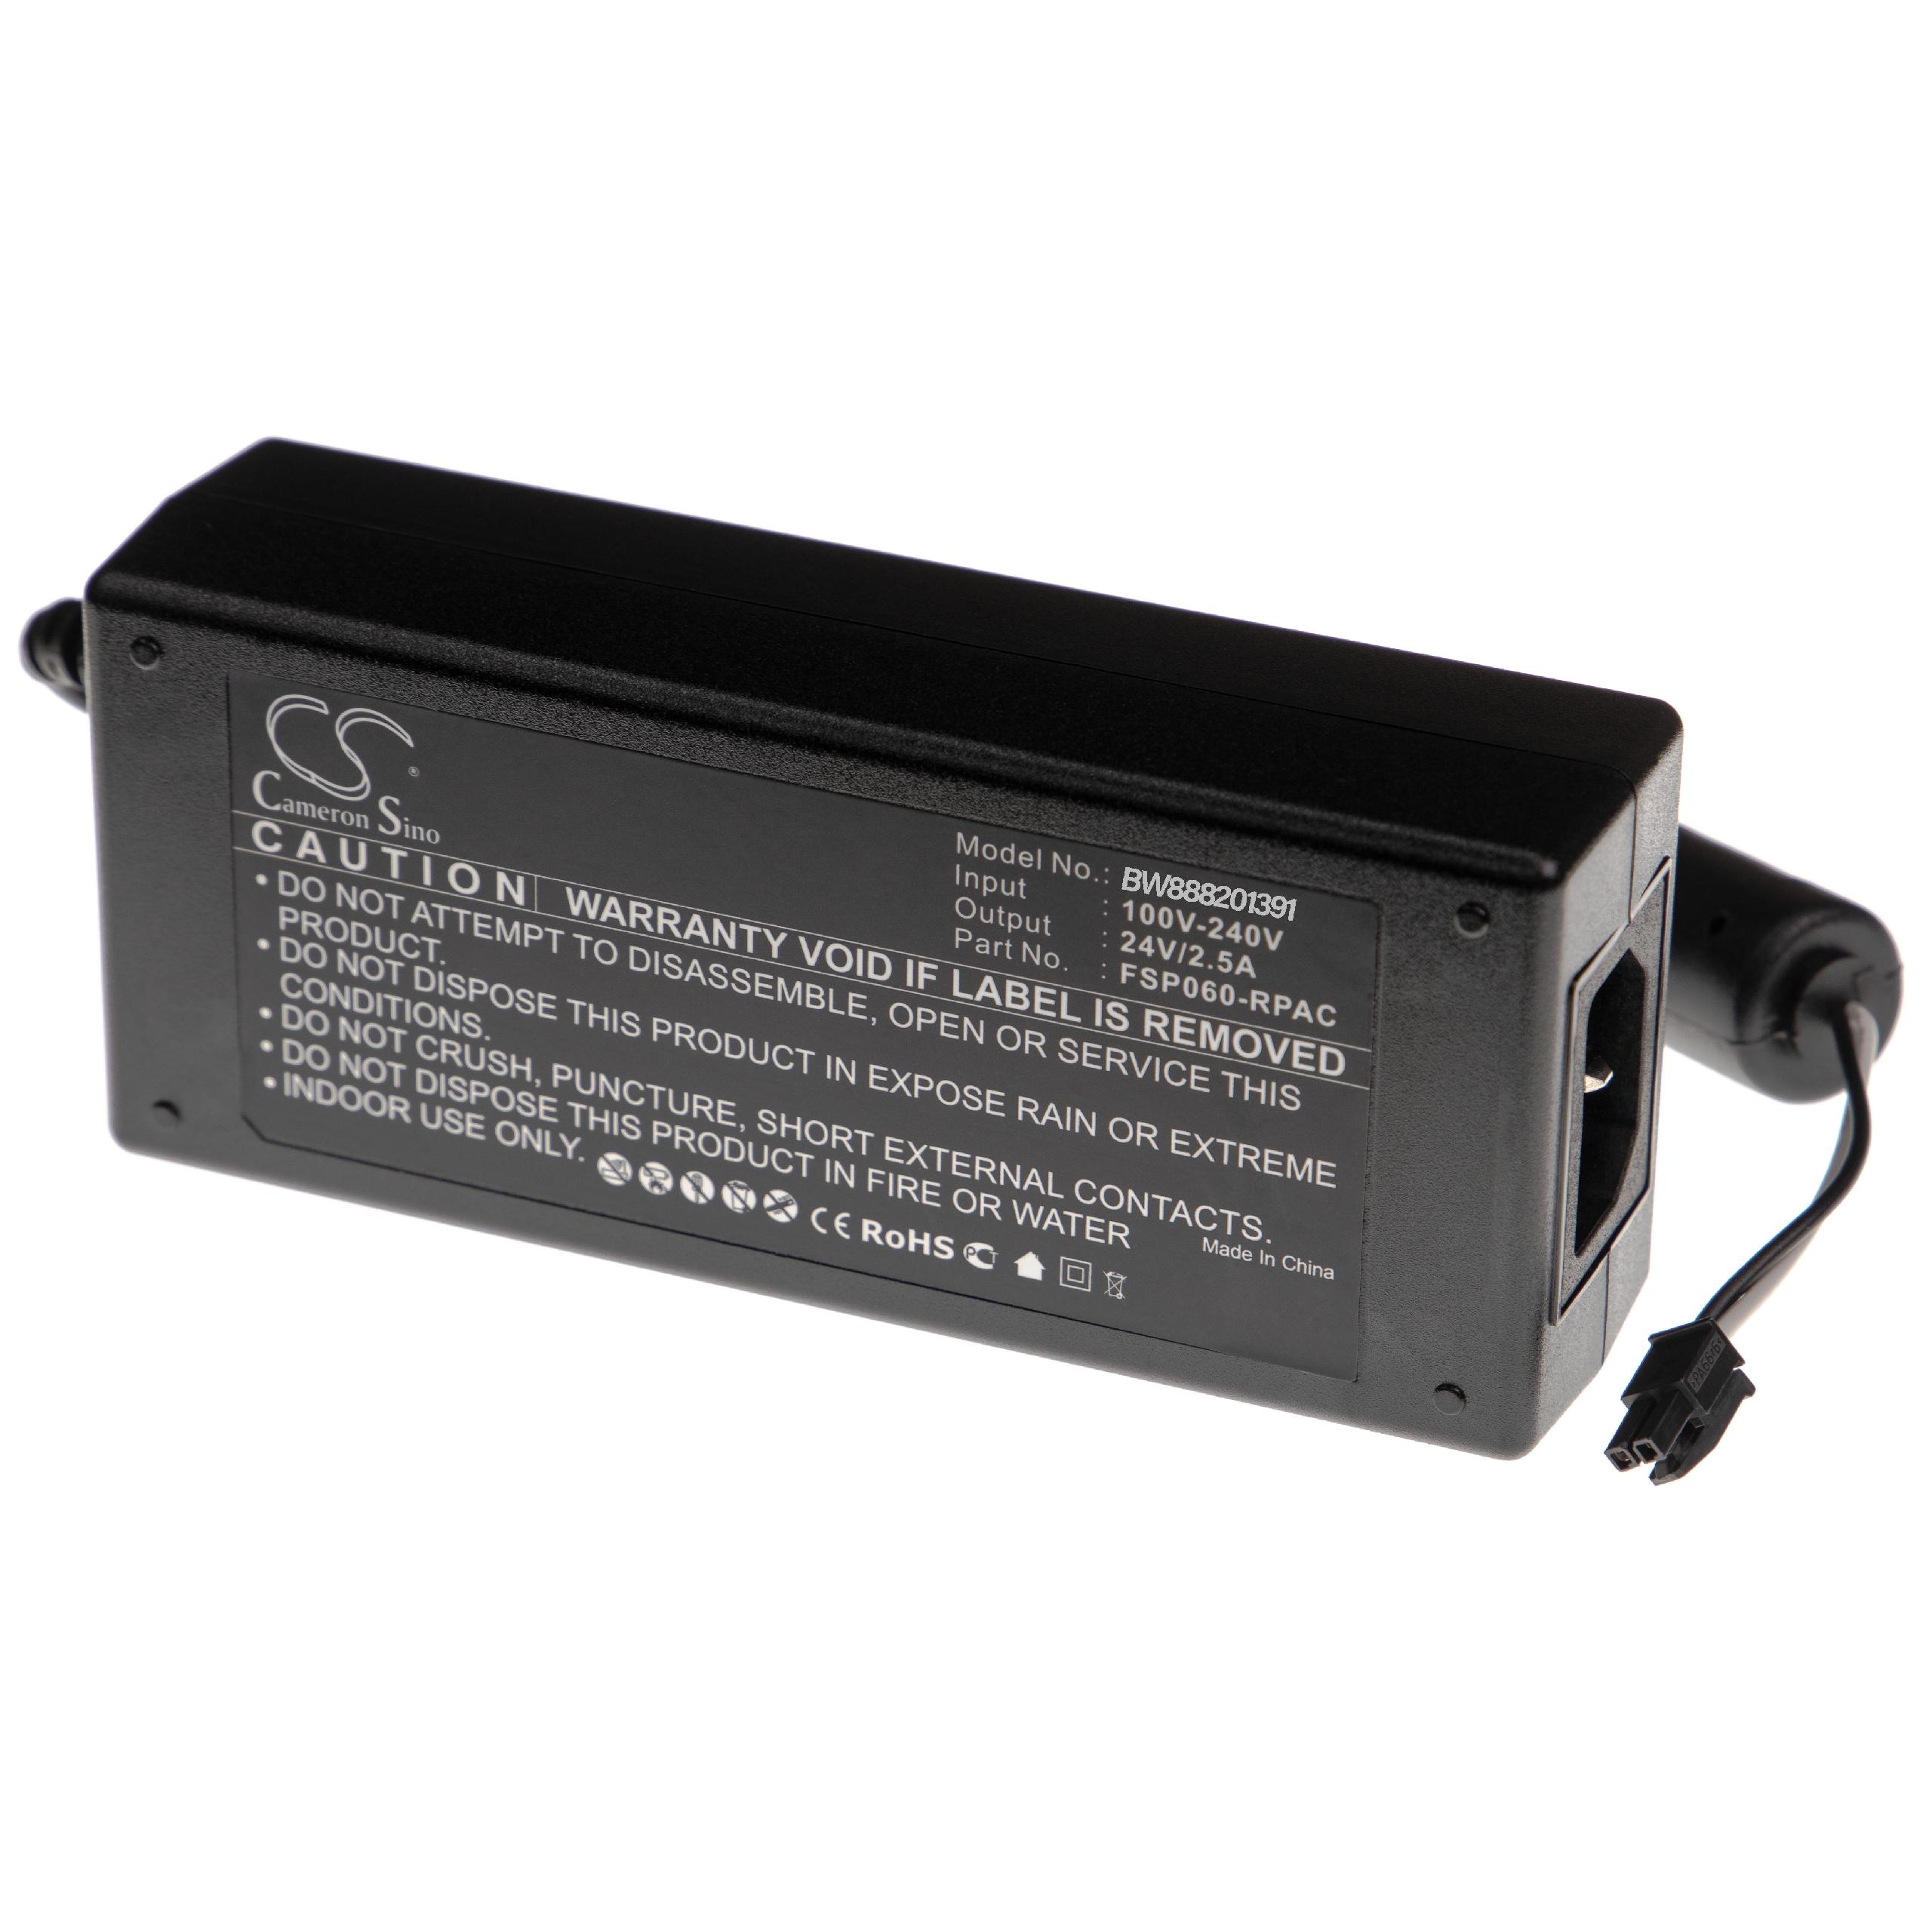 Mains Power Adapter replaces Zebra P1076000-004, FSP060-RPAC for Zebra Labelling Machine - DC 24 V / 2.5 A